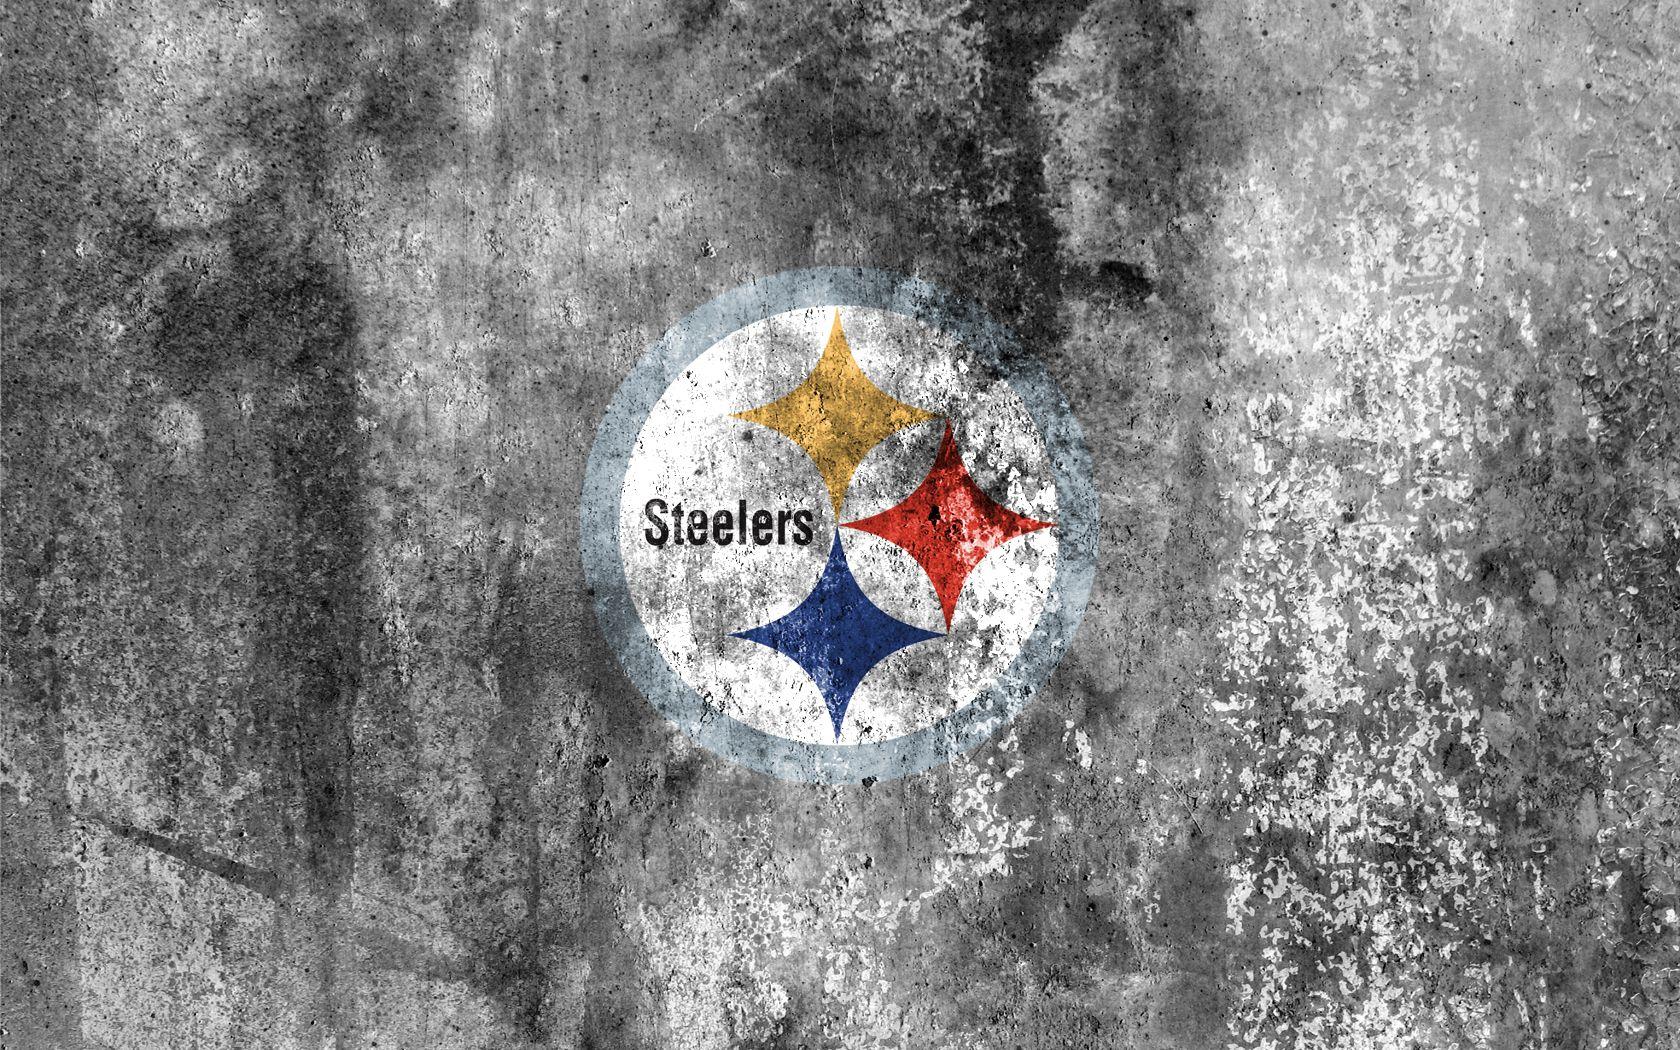 pittsburgh steelers wallpapers - Google Search  Pittsburgh steelers logo, Pittsburgh  steelers wallpaper, Steelers